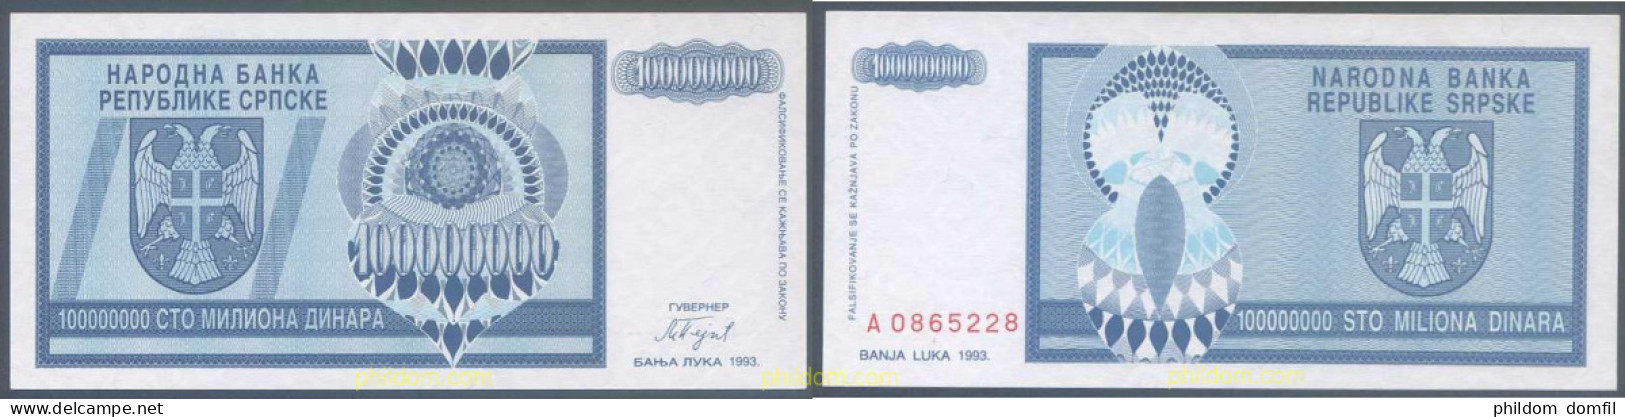 8037 BOSNIA-HERZEGOVINA. Adm Serbia 1993 SERBIA 100000000 DINARA 1993 - Serbia